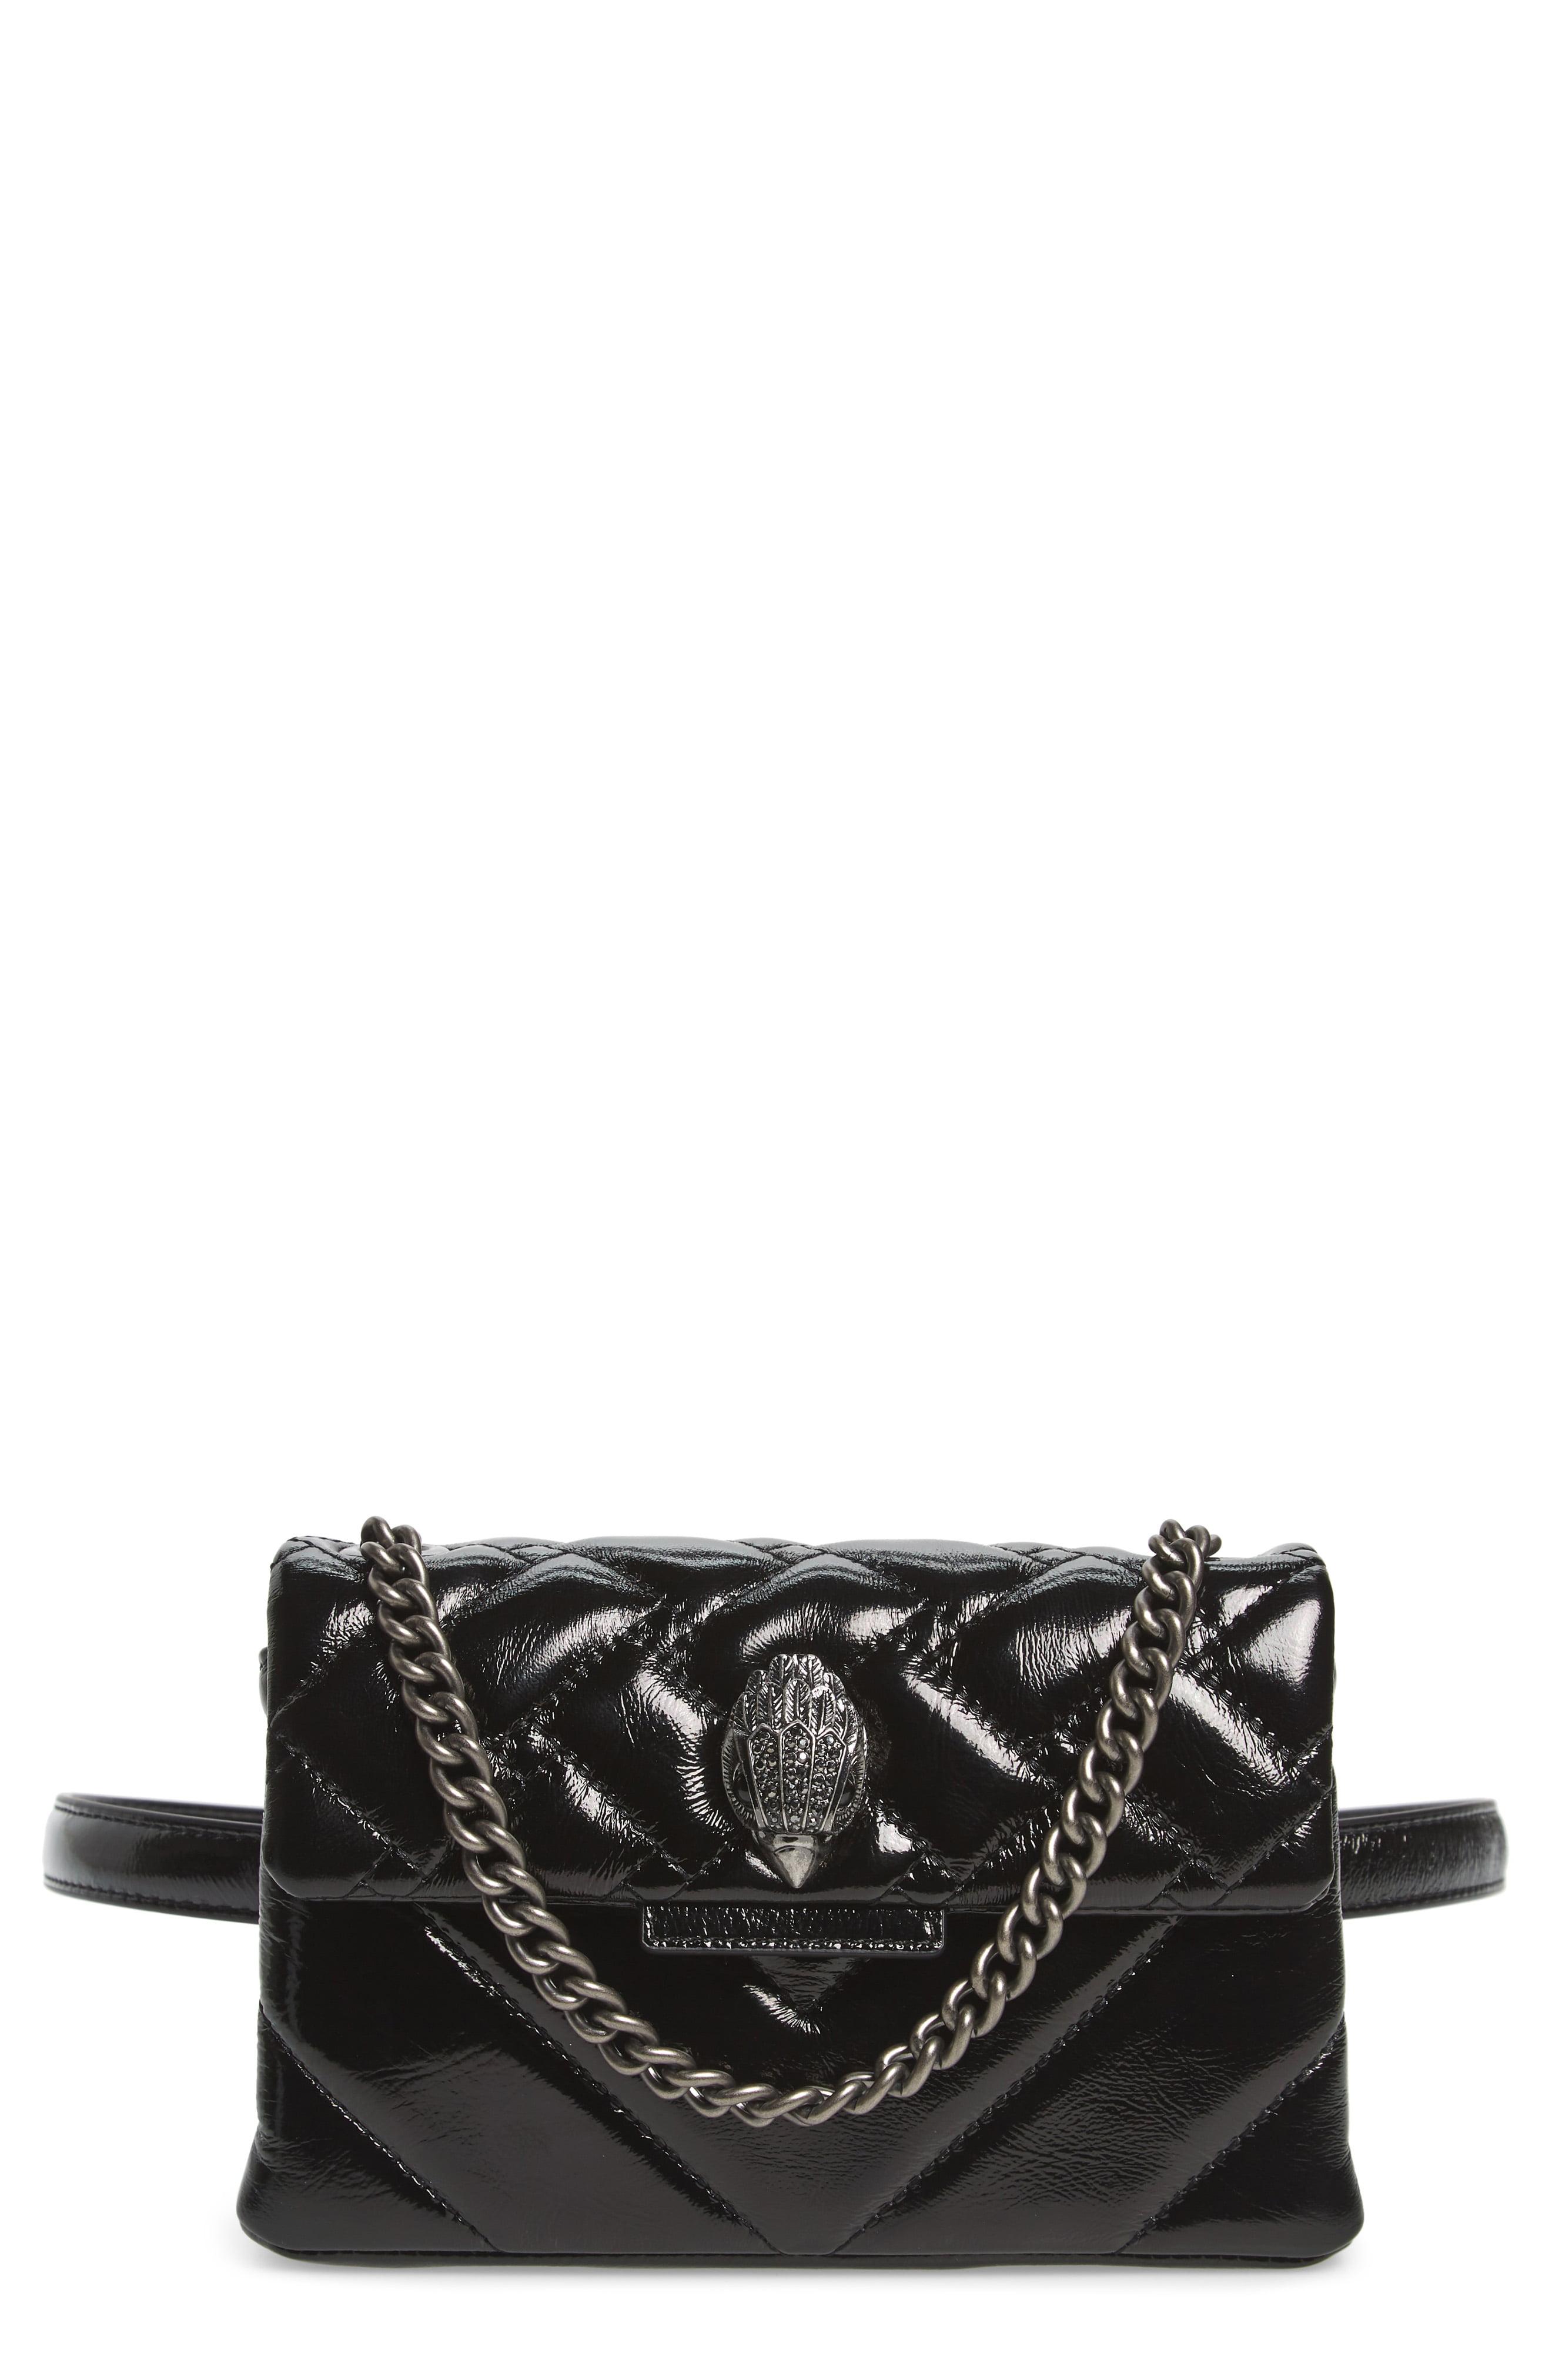 Lyst - Kurt Geiger Kensington Leather Convertible Belt Bag in Black